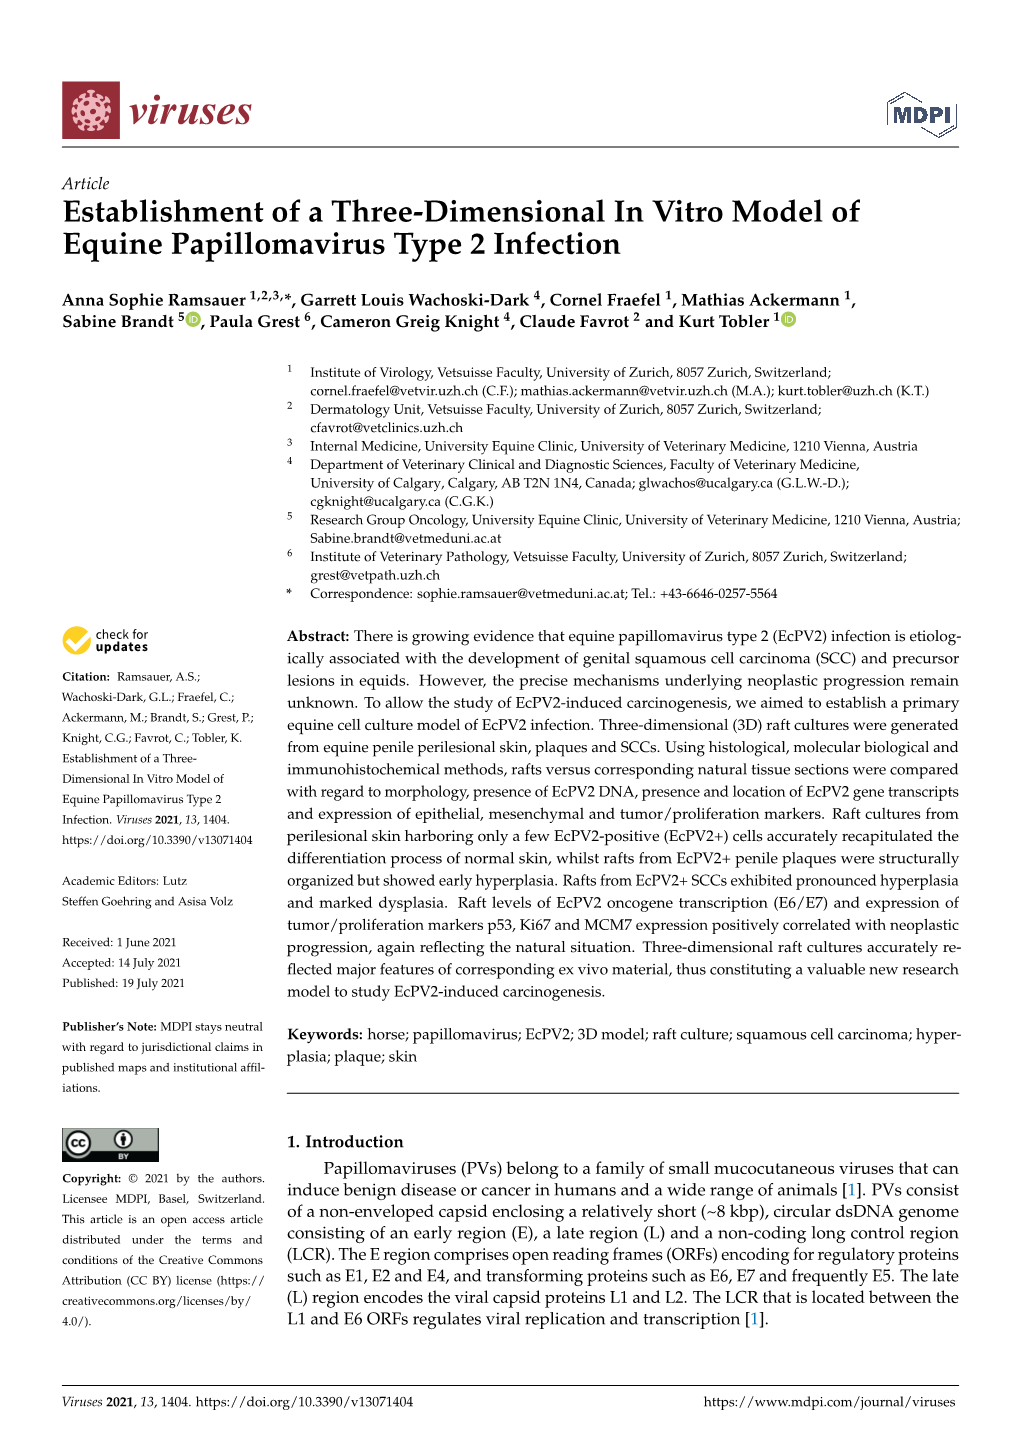 Establishment of a Three-Dimensional in Vitro Model of Equine Papillomavirus Type 2 Infection